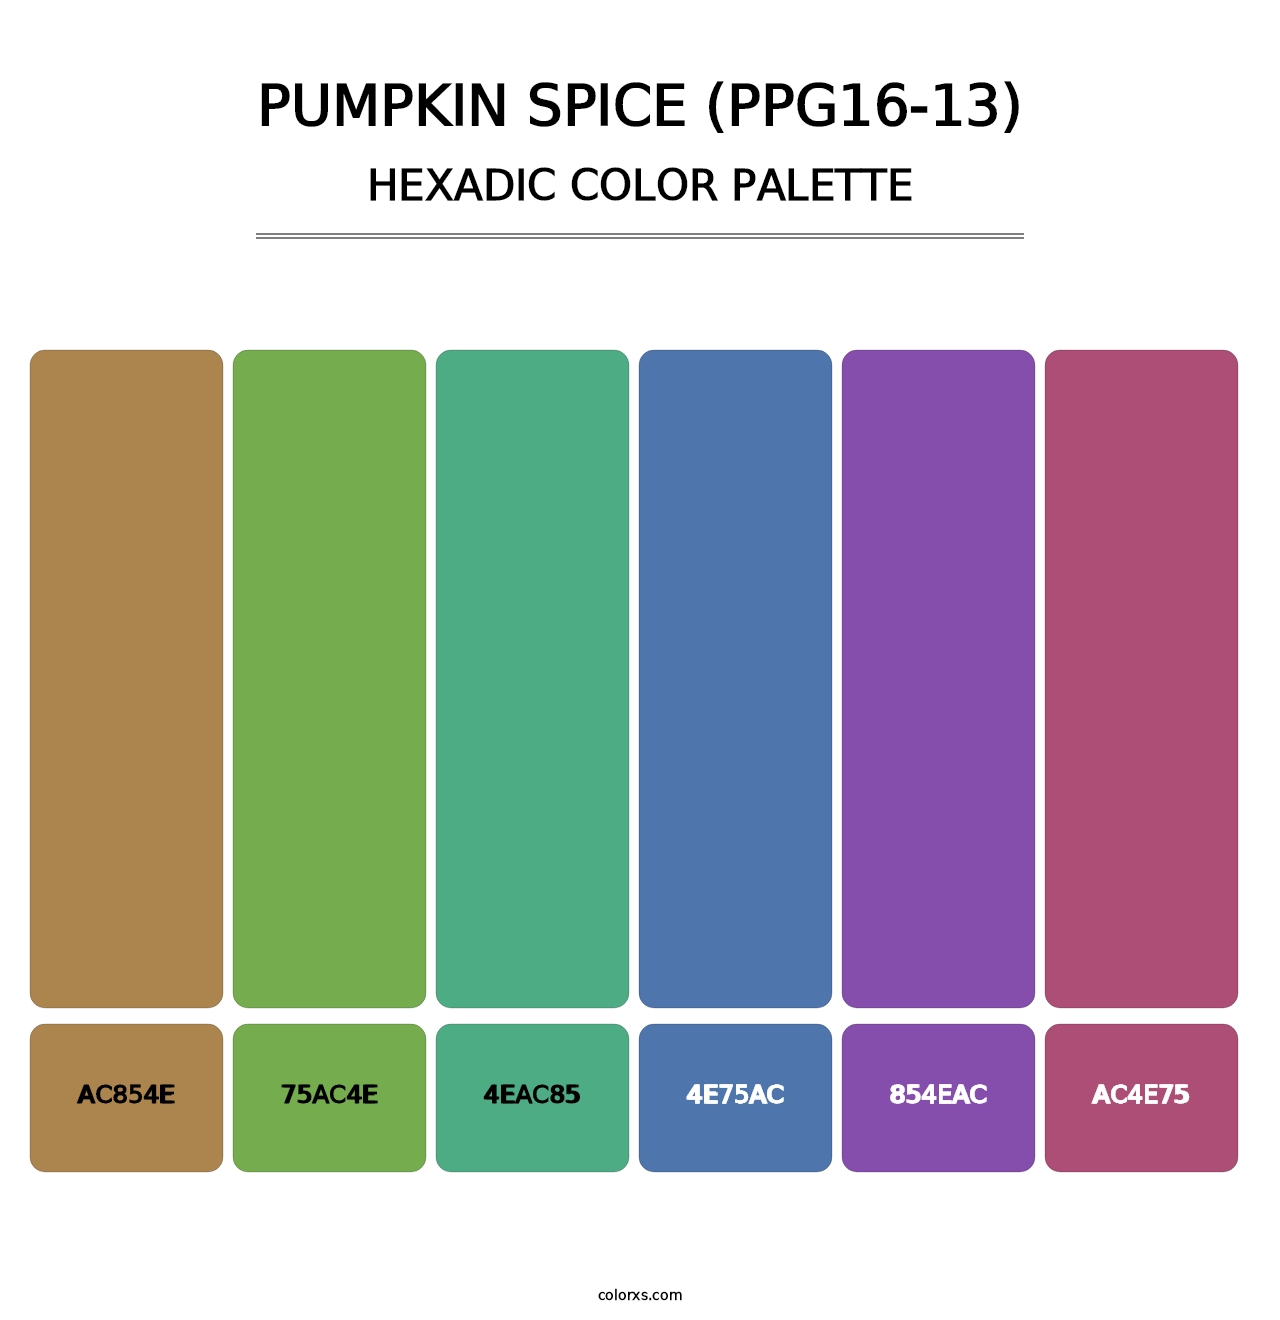 Pumpkin Spice (PPG16-13) - Hexadic Color Palette